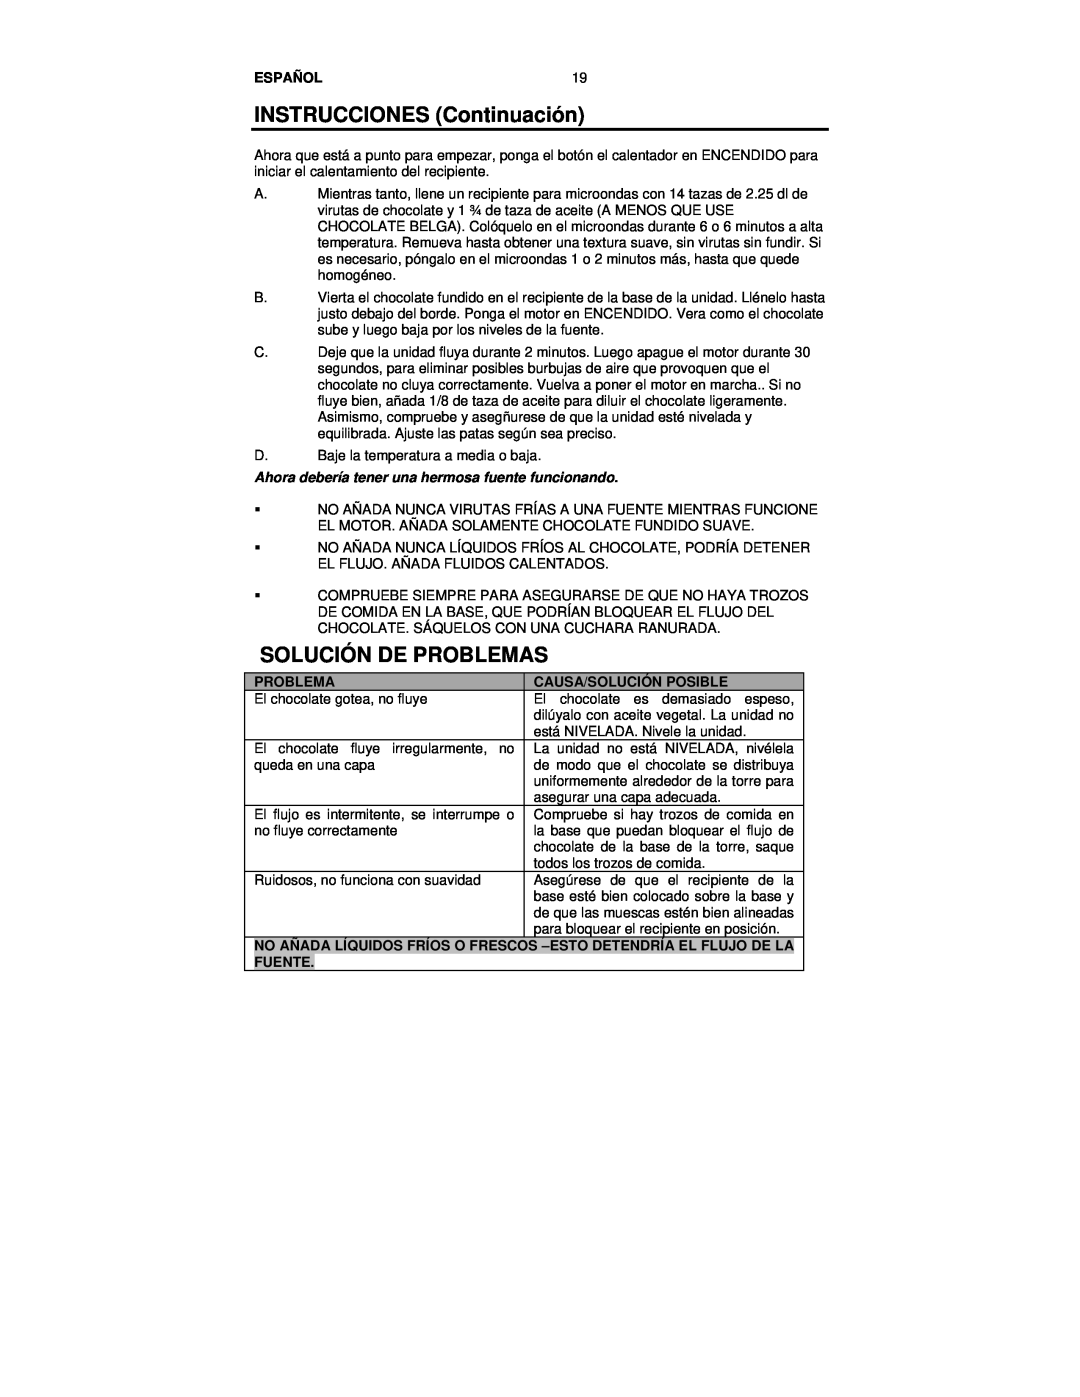 Nostalgia Electrics CFF-552 manual INSTRUCCIONES Continuación, Solución De Problemas, Español, Causa/Solución Posible 